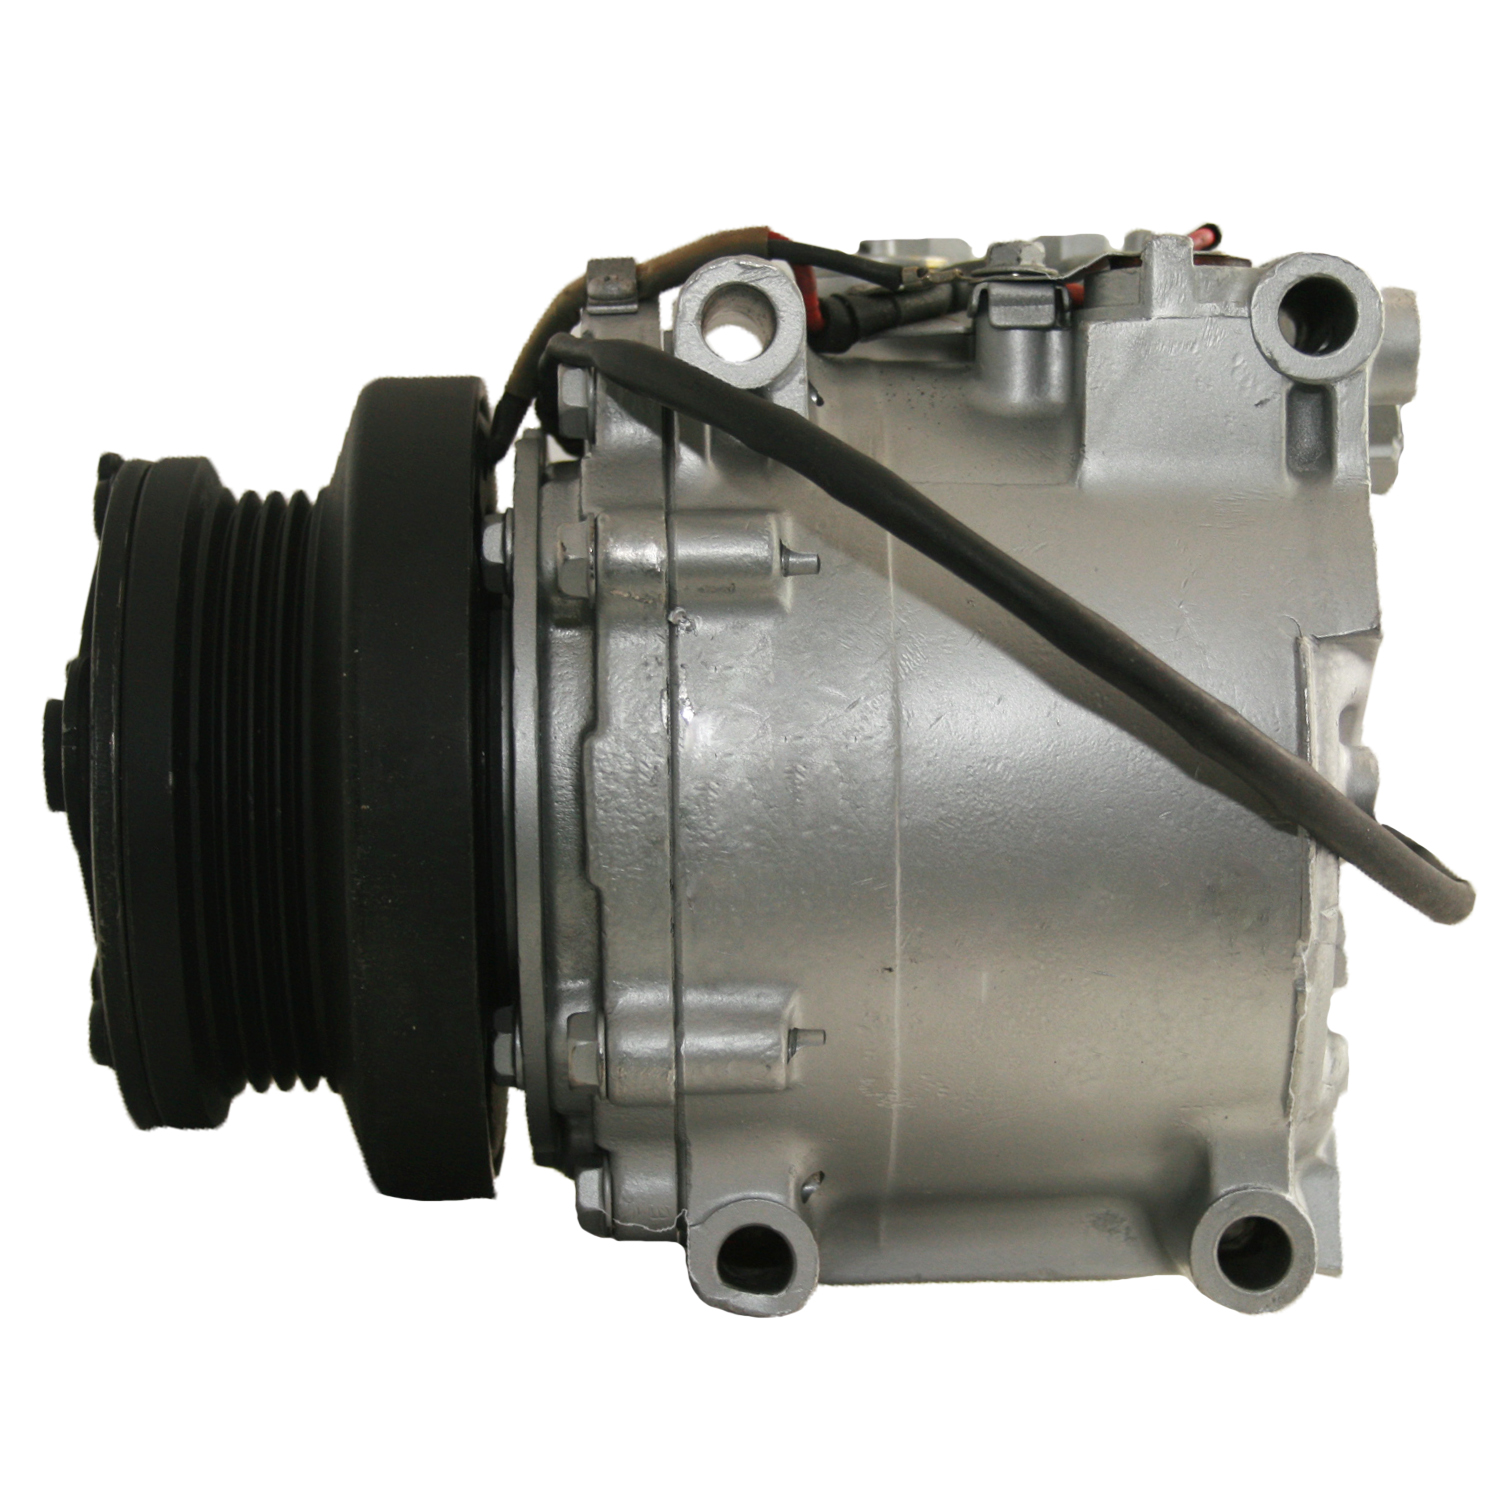 TCW Compressor 40801.401 Remanufactured